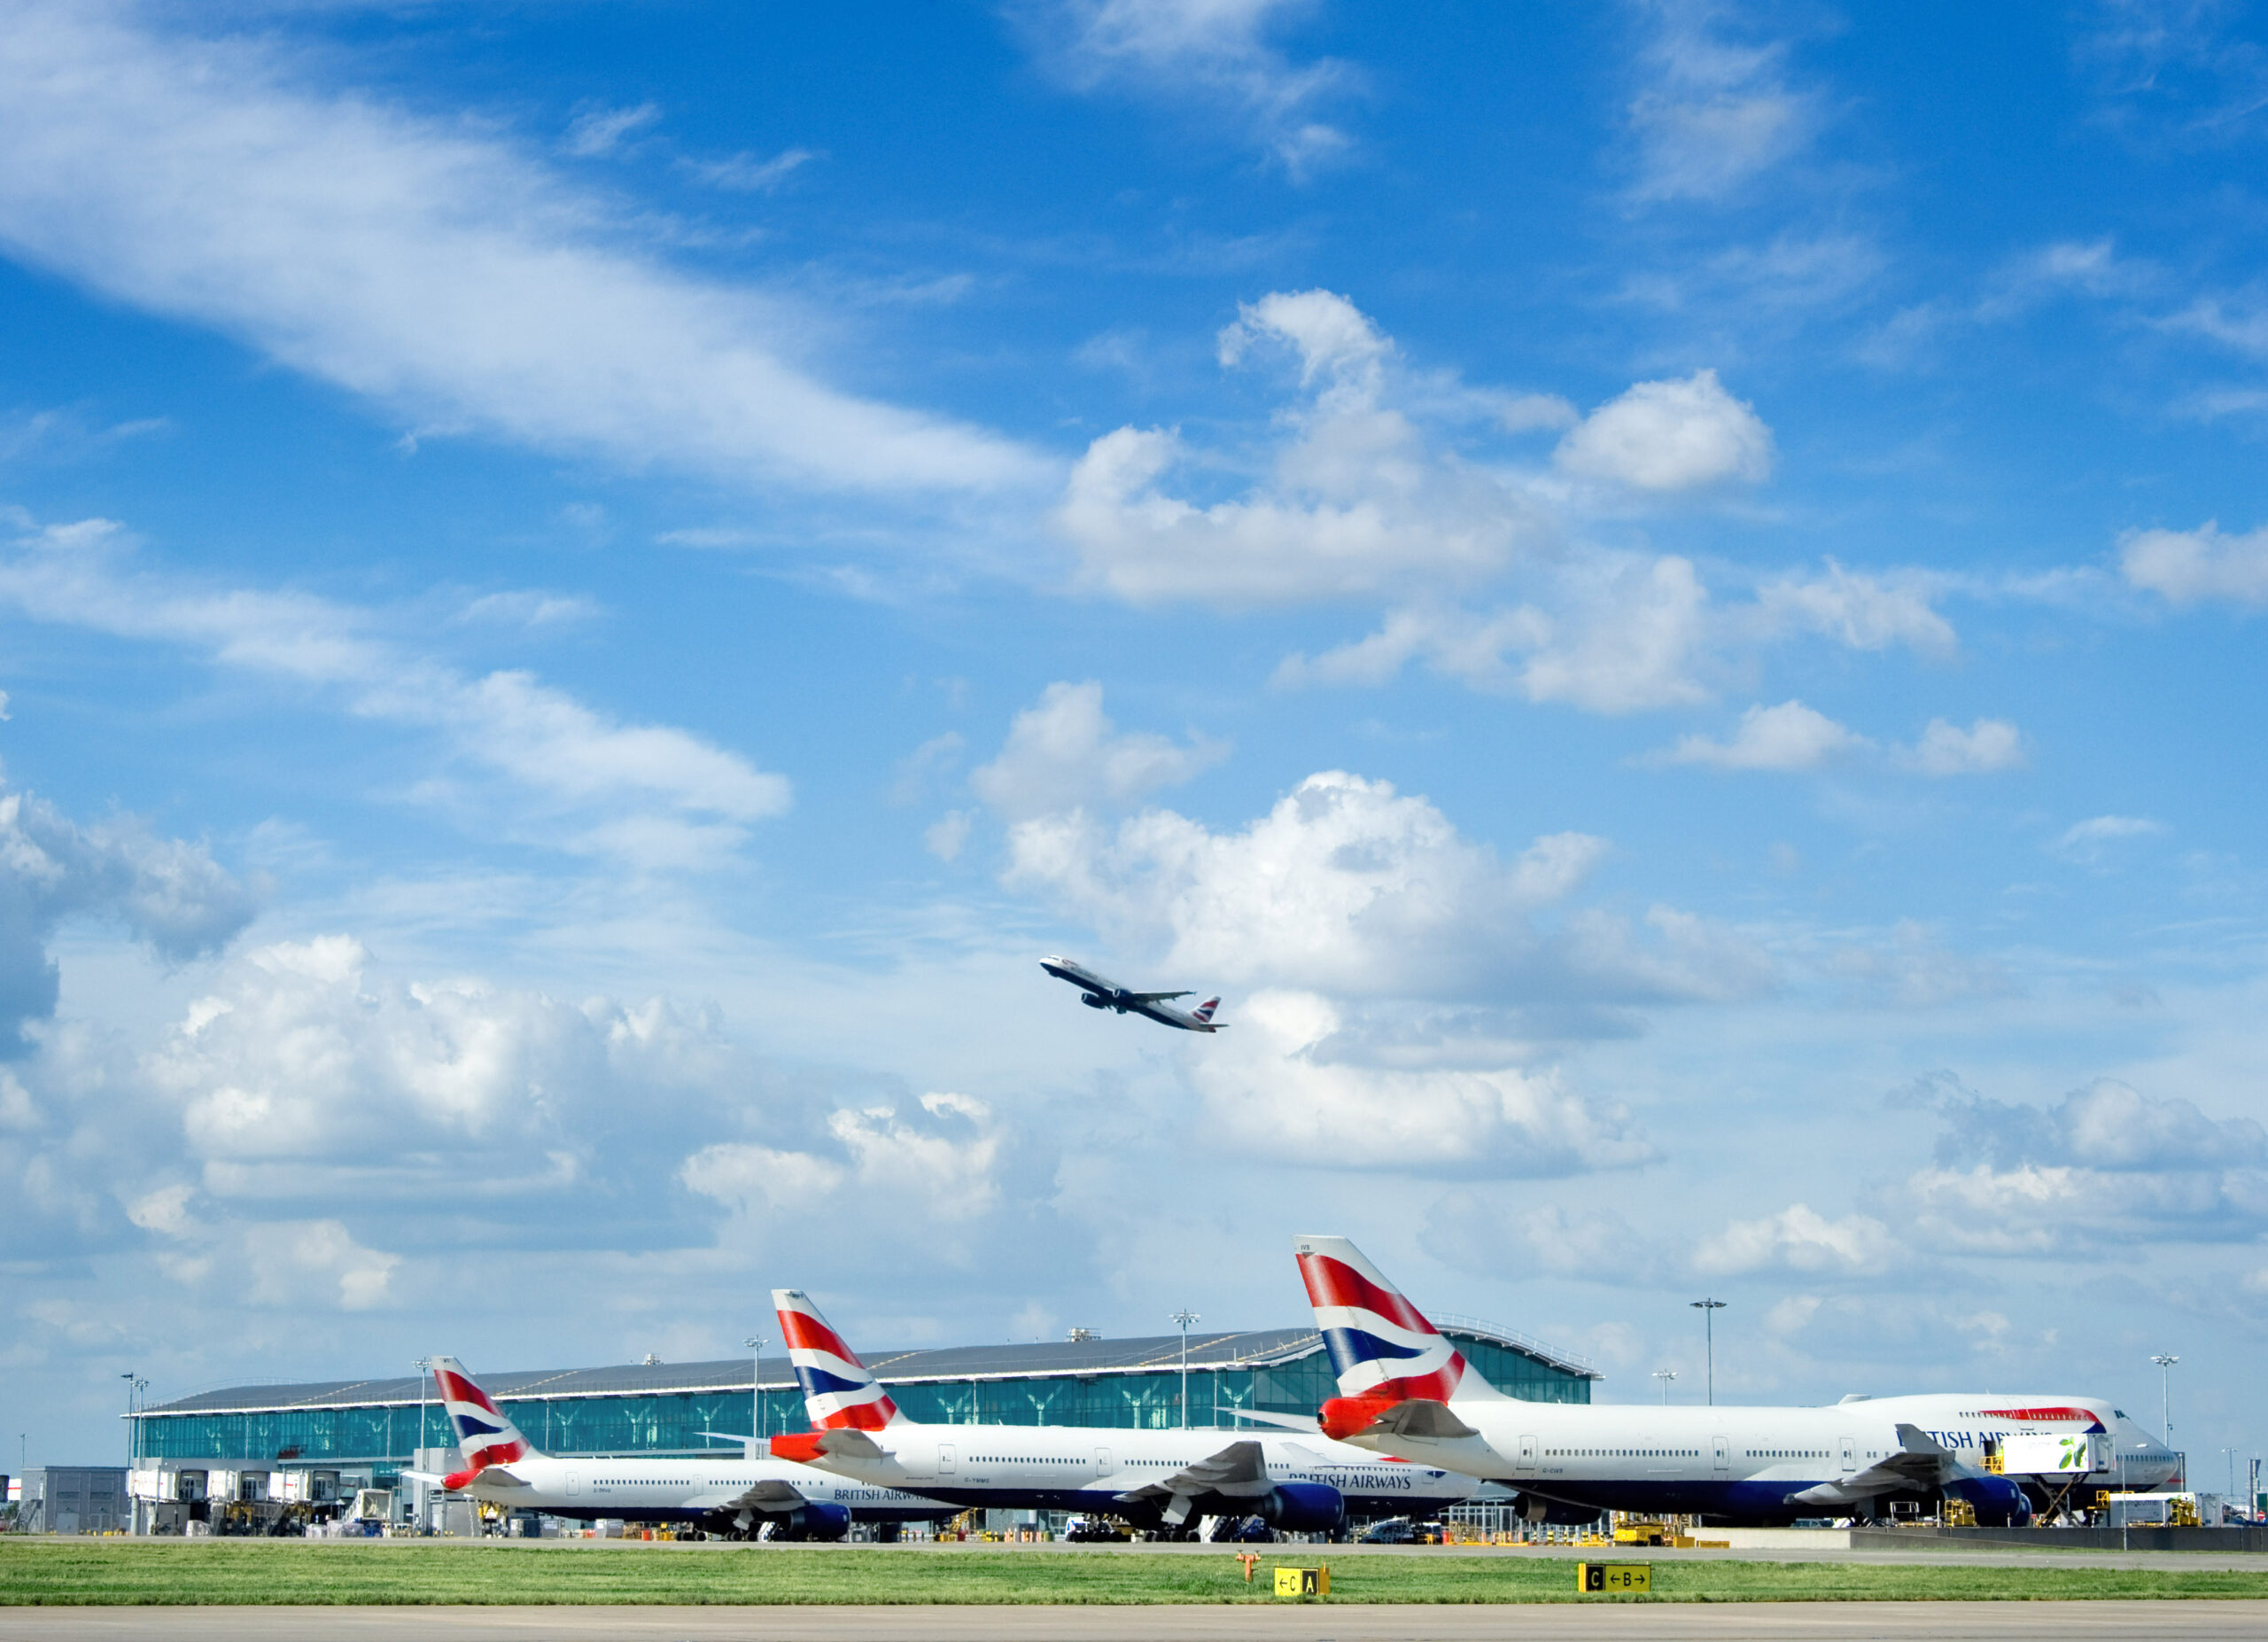 London Heathrow Landing Fees: Why Were They So High?